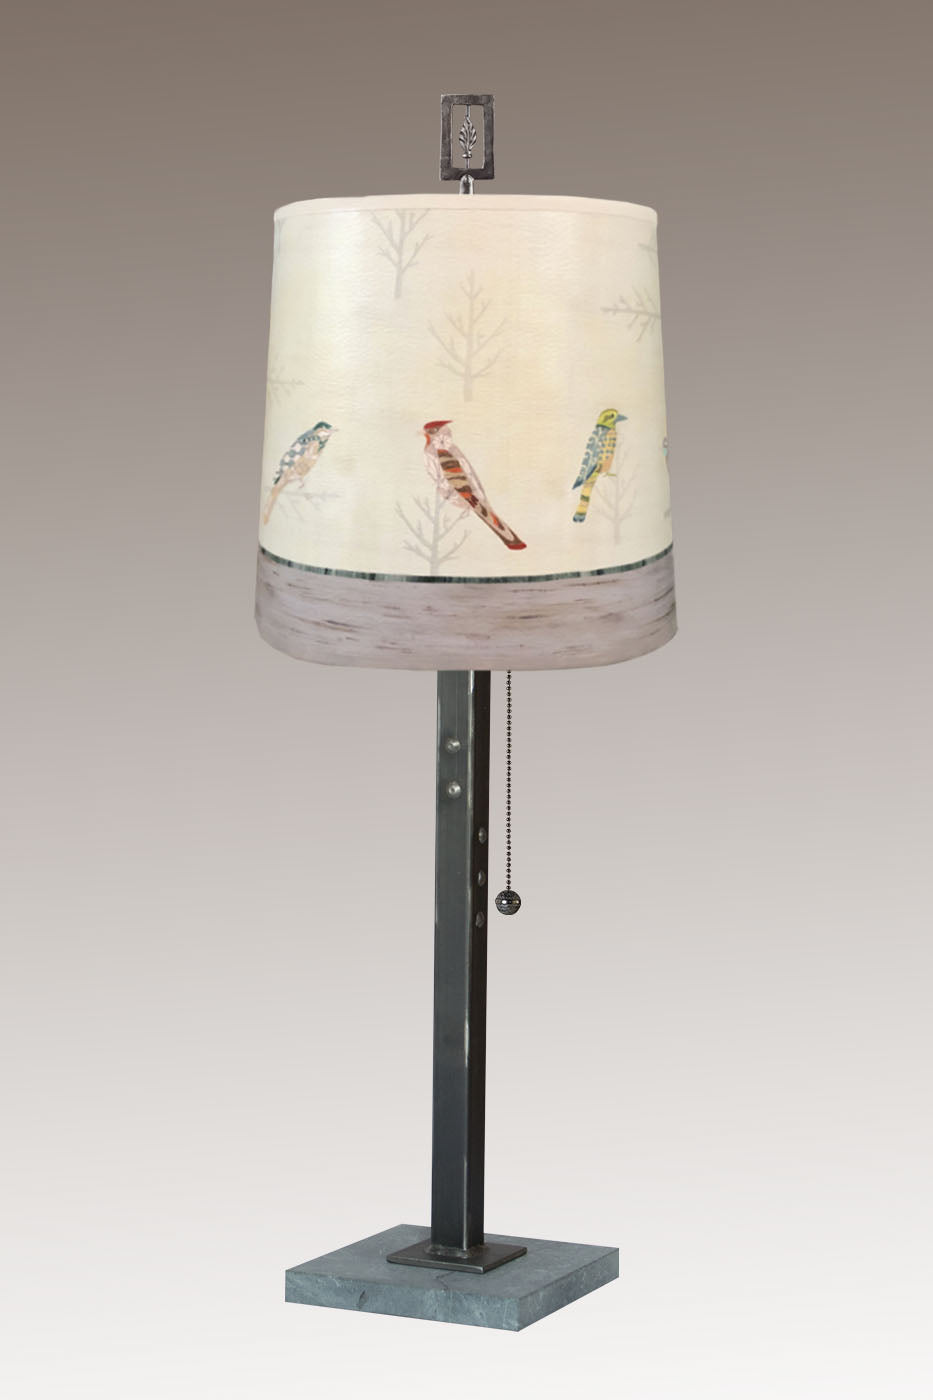 Steel Table Lamp with Medium Drum Shade in Bird Friends